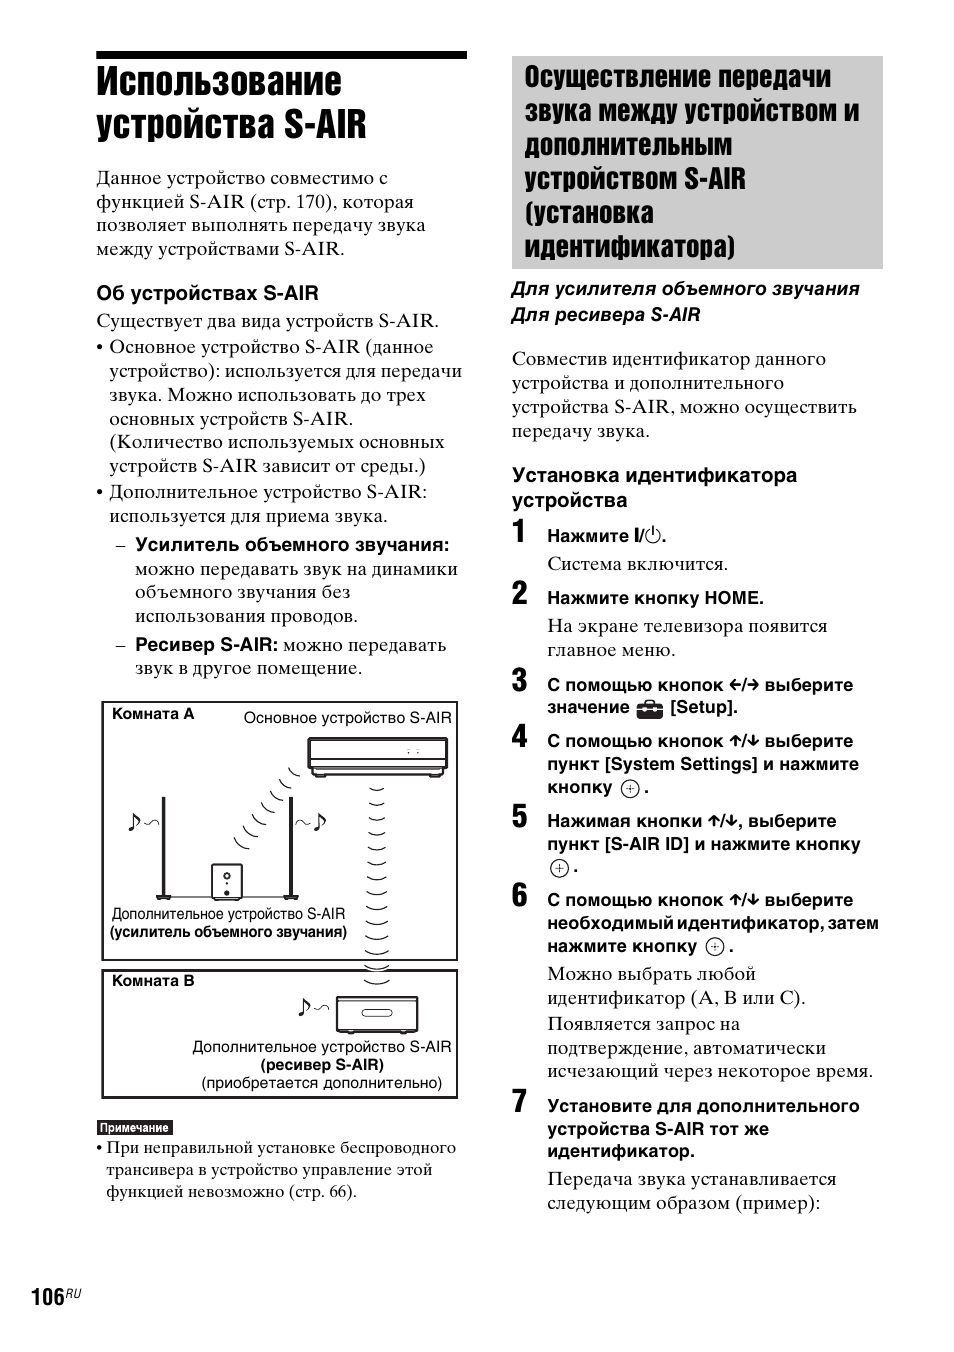 Использование устройства s-air, Использование устройства, S-air | Инструкция по эксплуатации Sony BDV-IS1000 | Страница 106 / 339